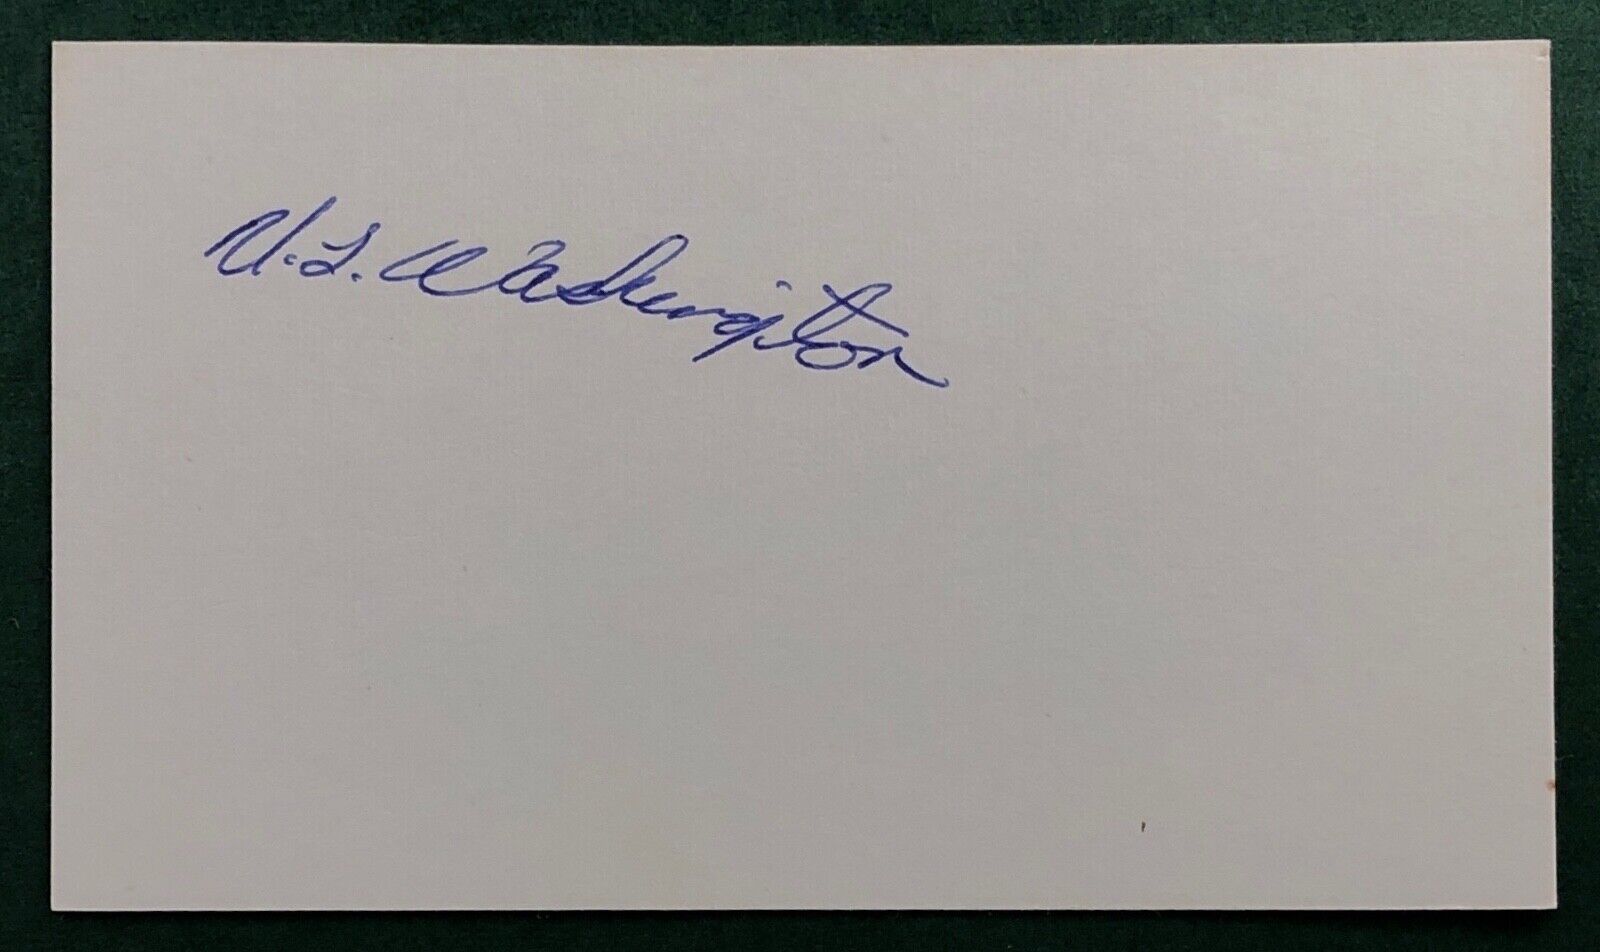 U. L. WASHINGTON BASEBALL AUTOGRAPH INDEX CARD